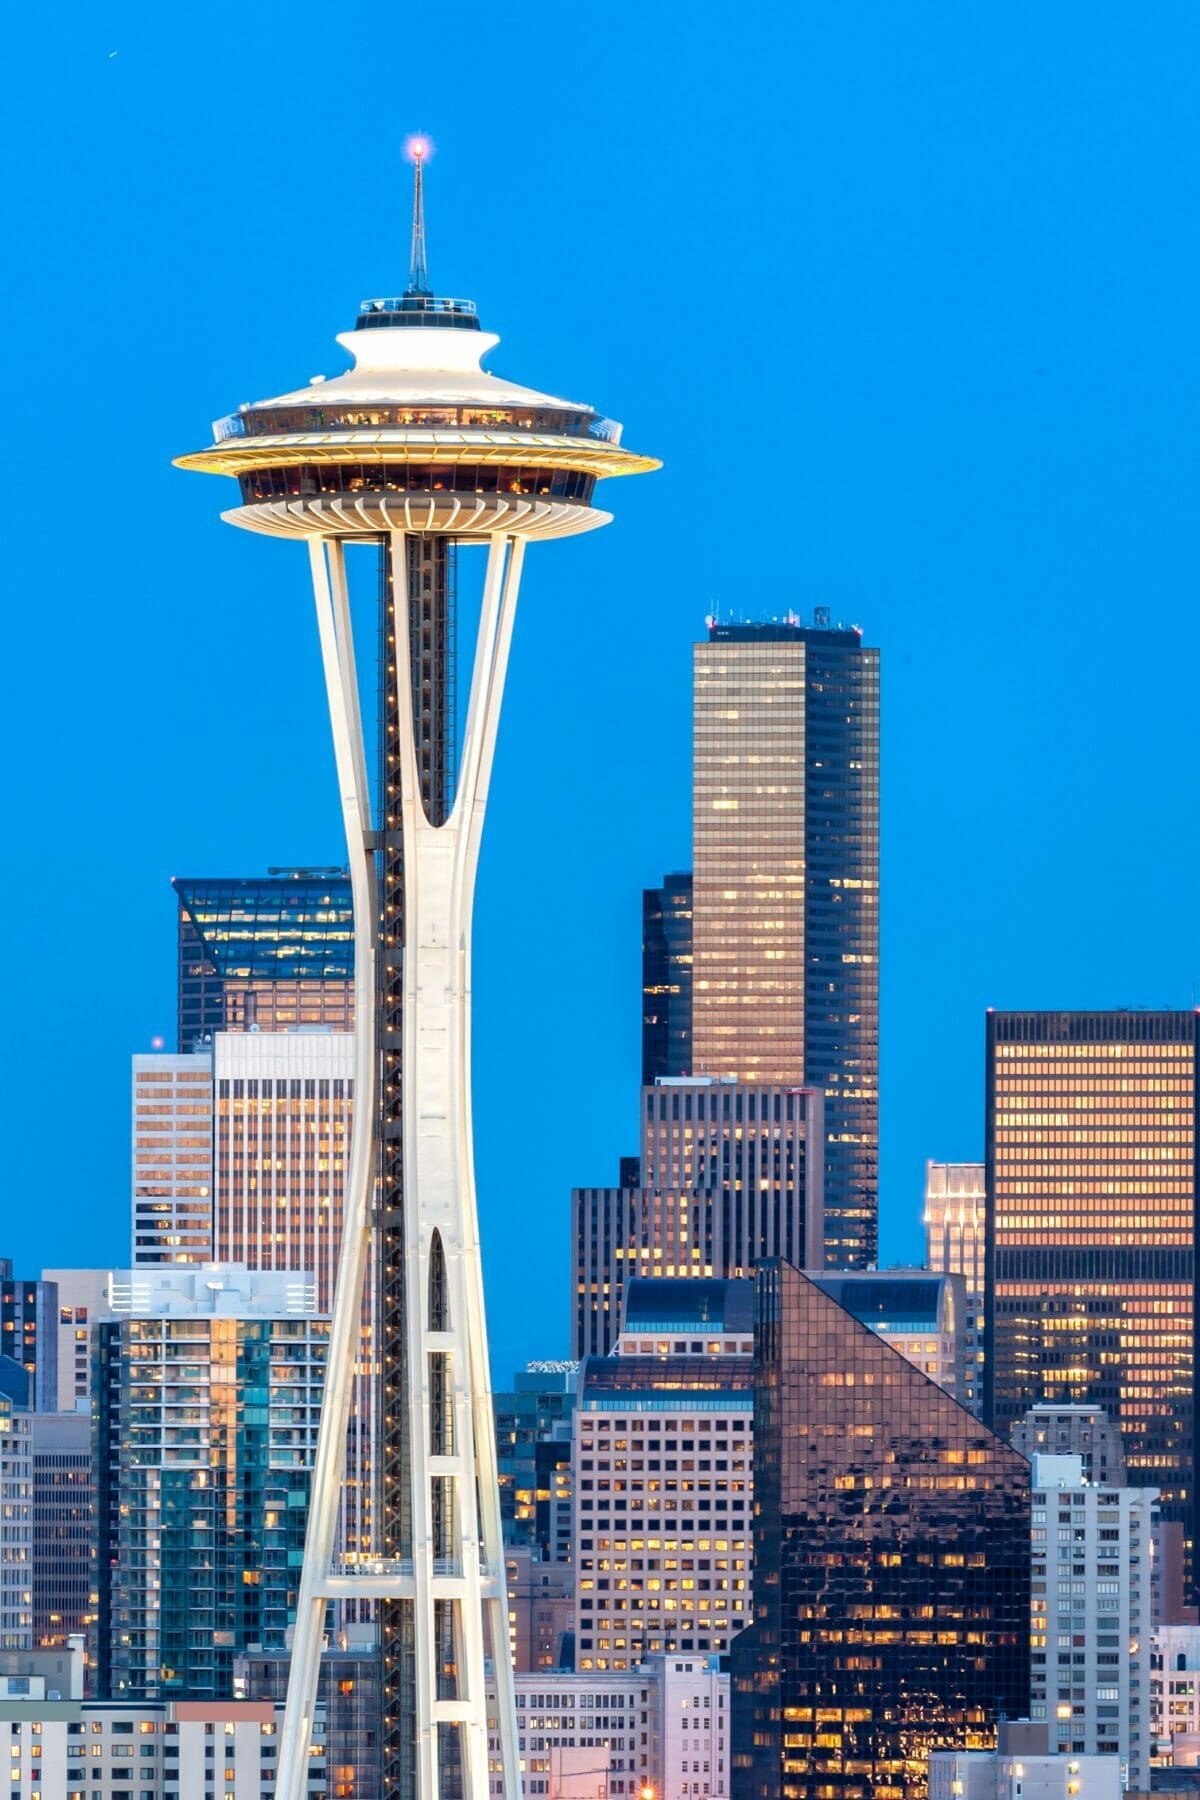 Seattle Skyline, USA